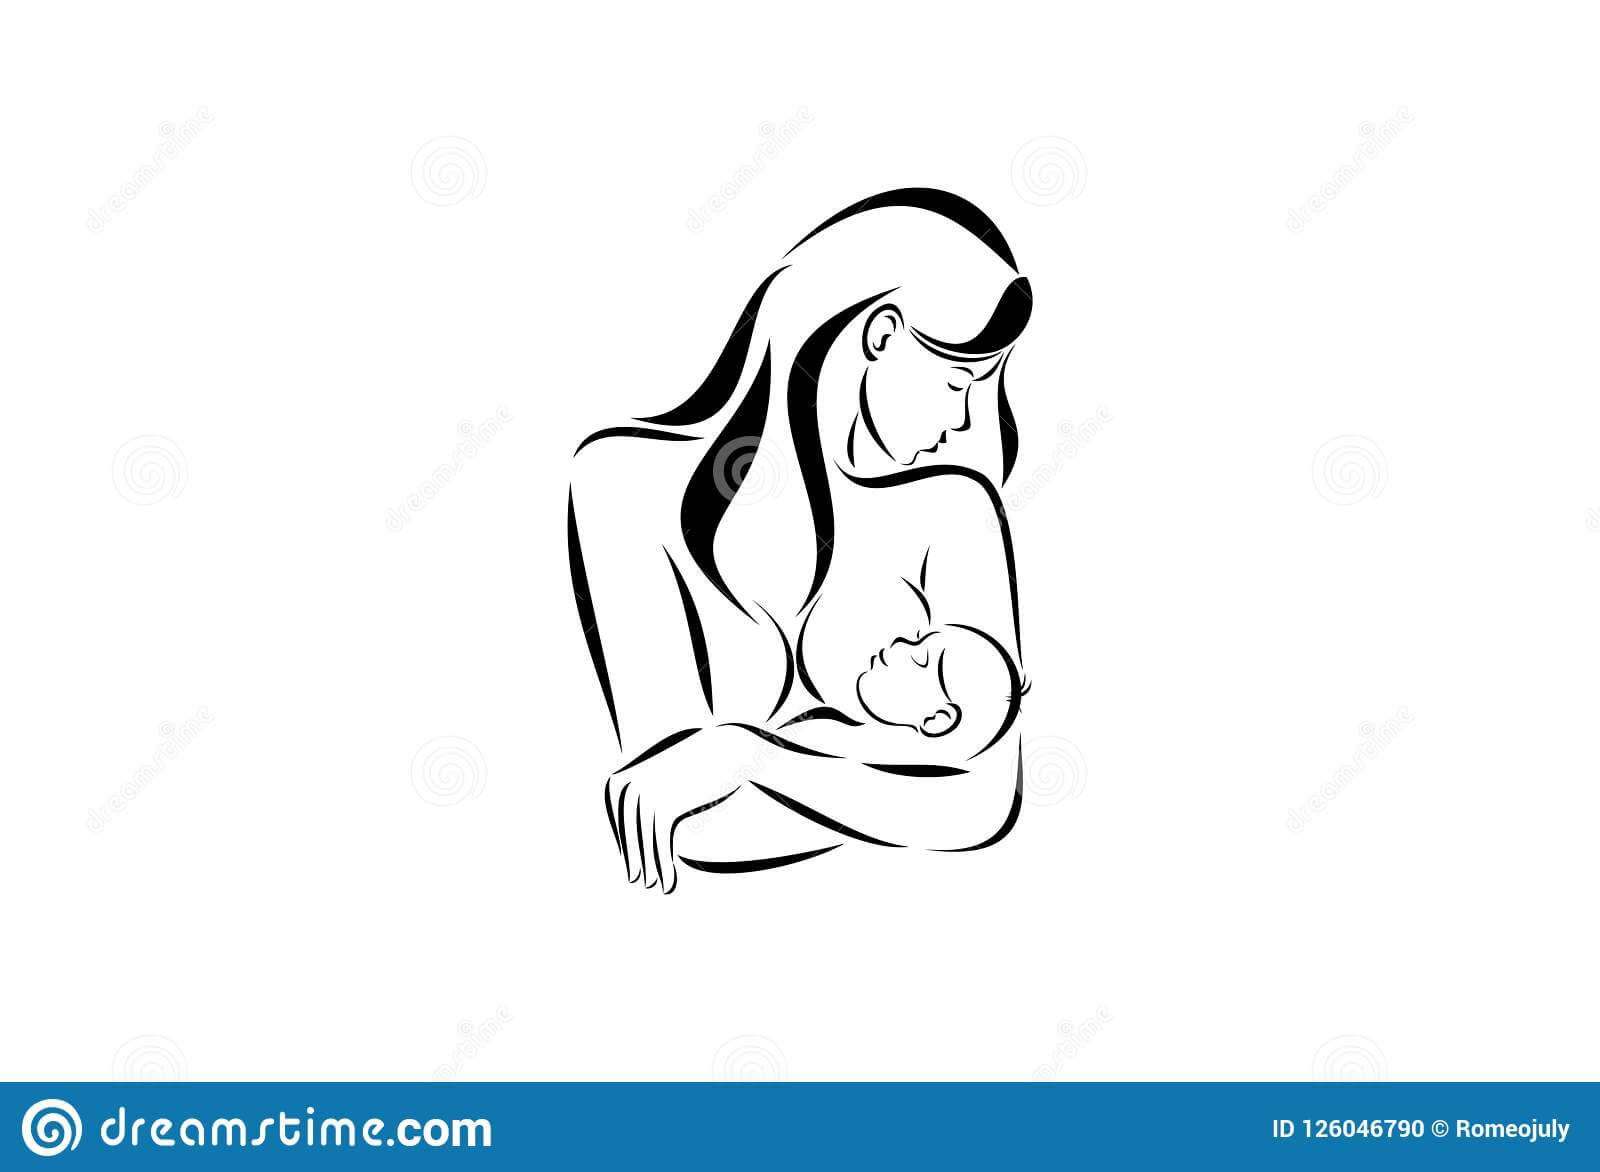 Breastfeeding Blank Sketch Template Stock Illustration Inside Blank Model Sketch Template